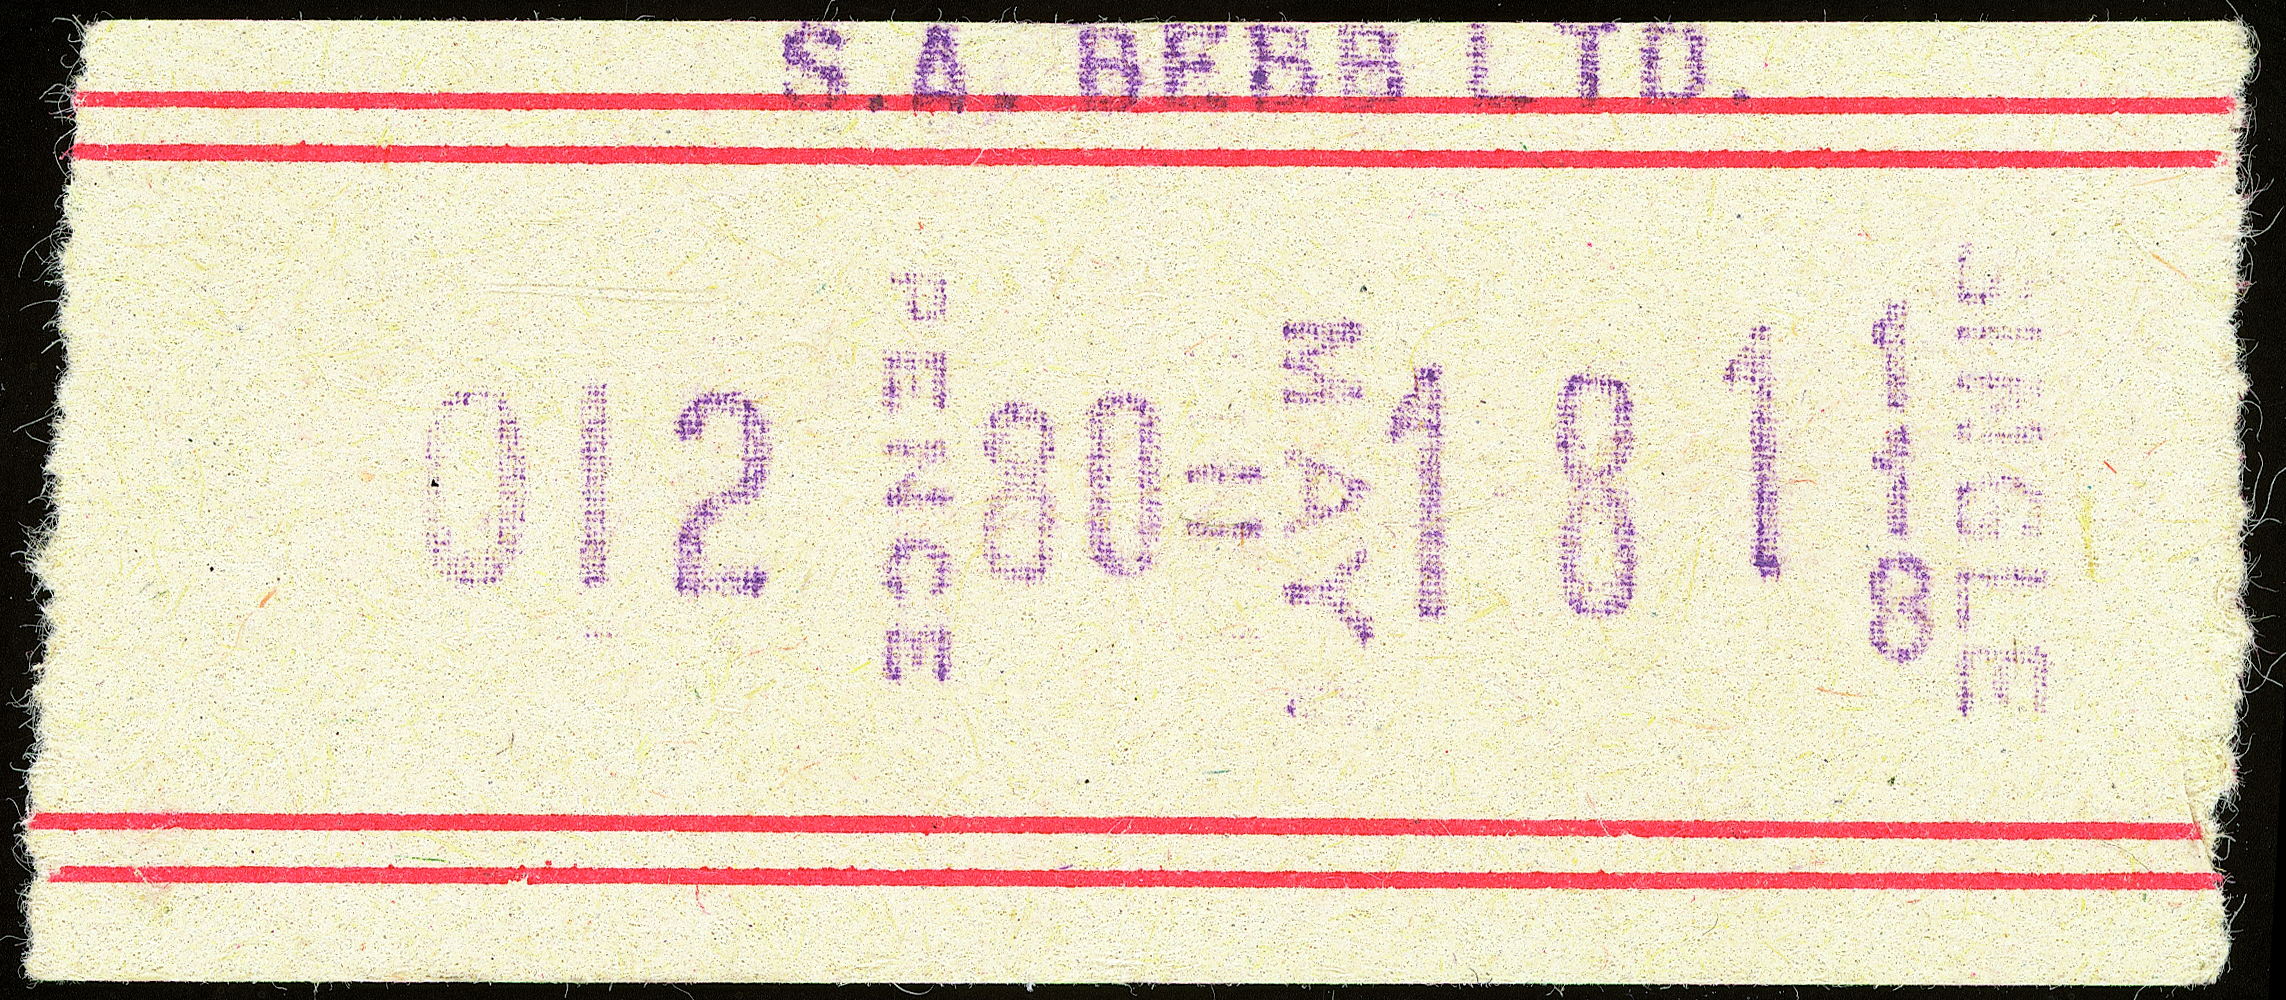 S.A. Bebb Ltd. bus ticket